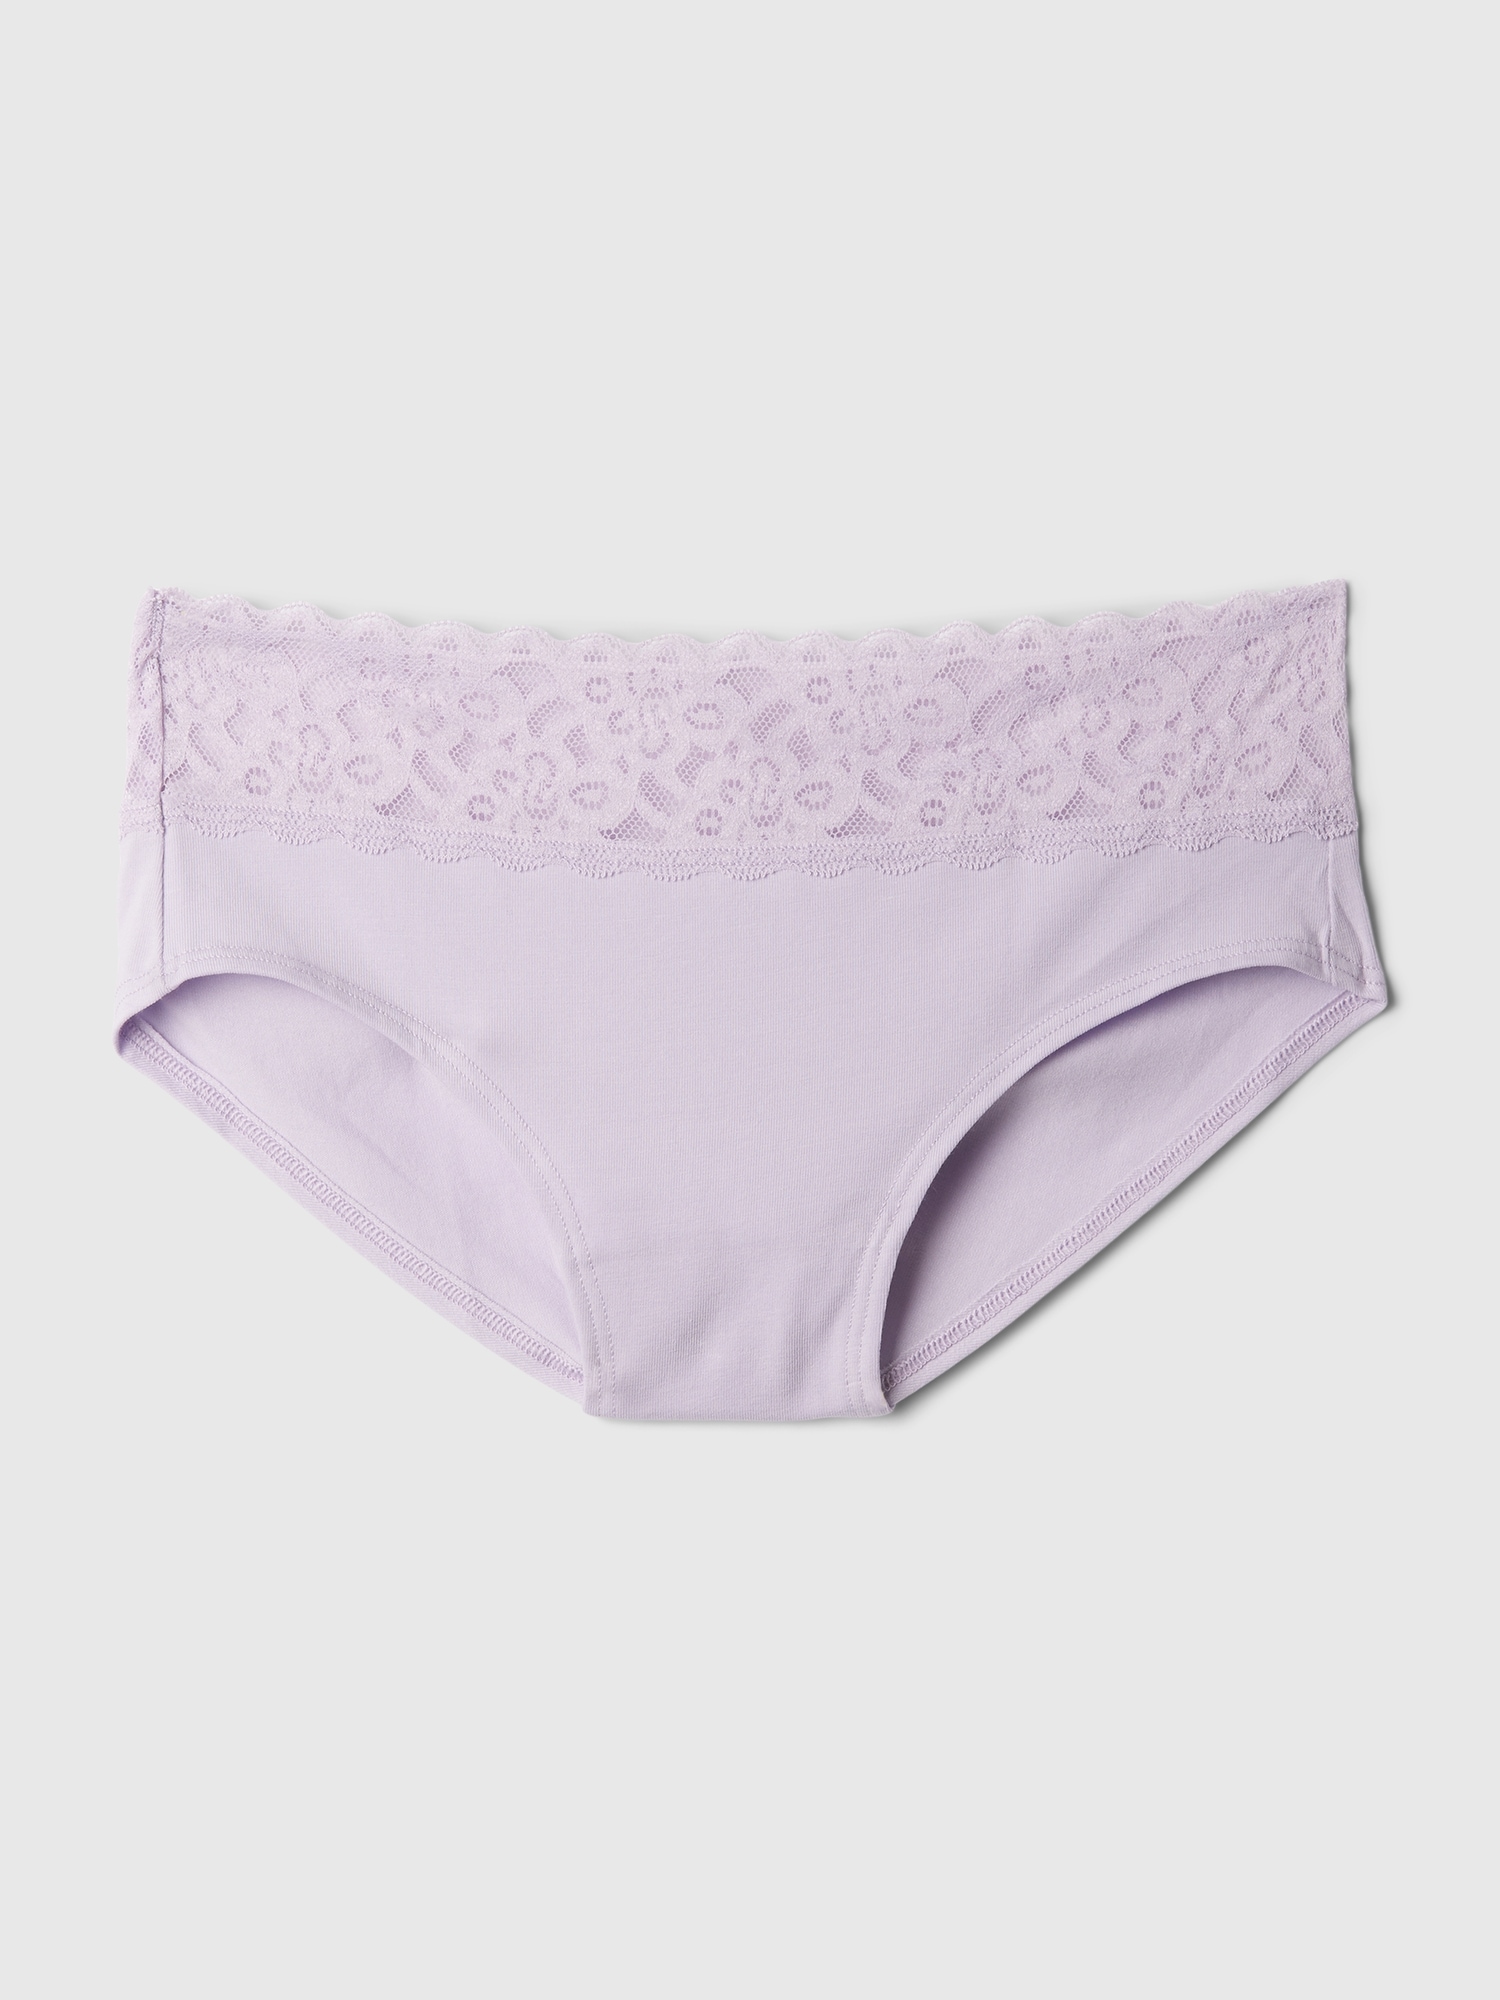 GAP, Intimates & Sleepwear, New Love By Gap Lilac Cotton Underwear